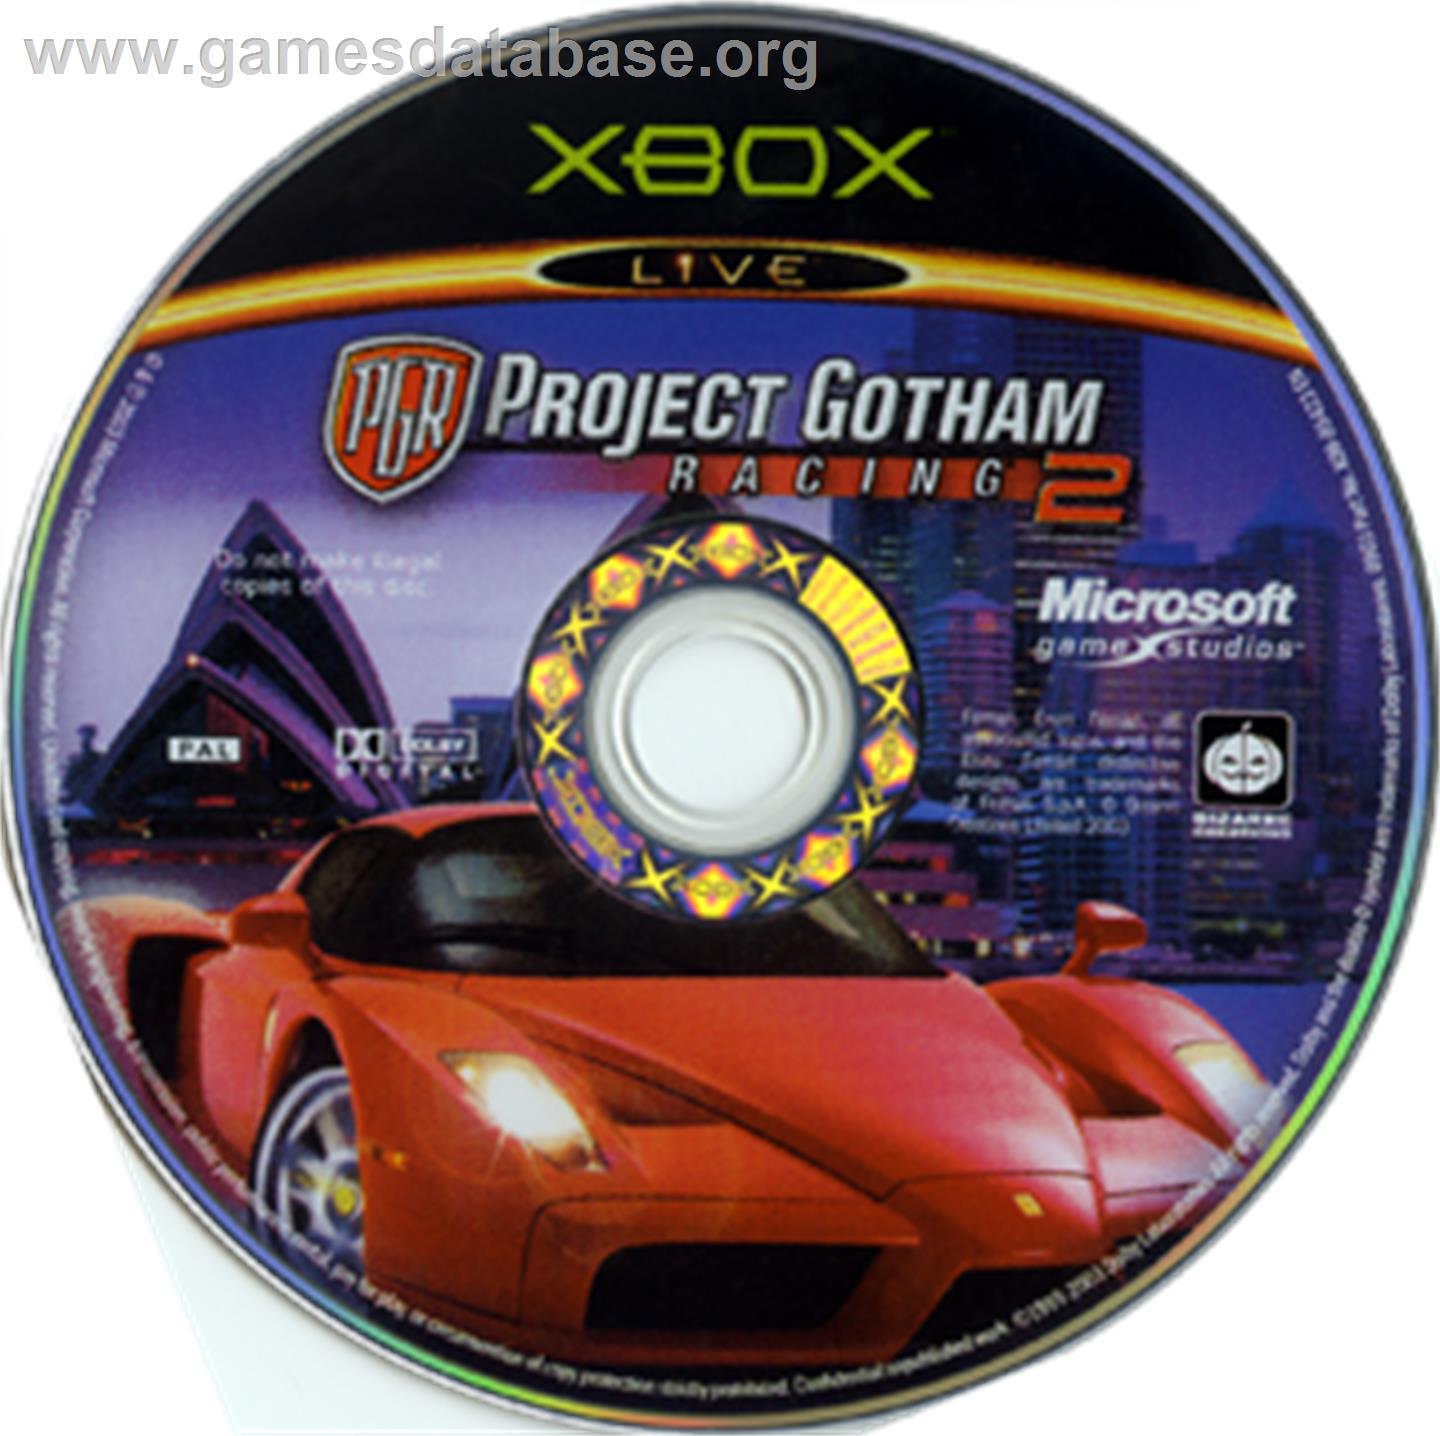 Project Gotham Racing 2 - Microsoft Xbox - Artwork - CD